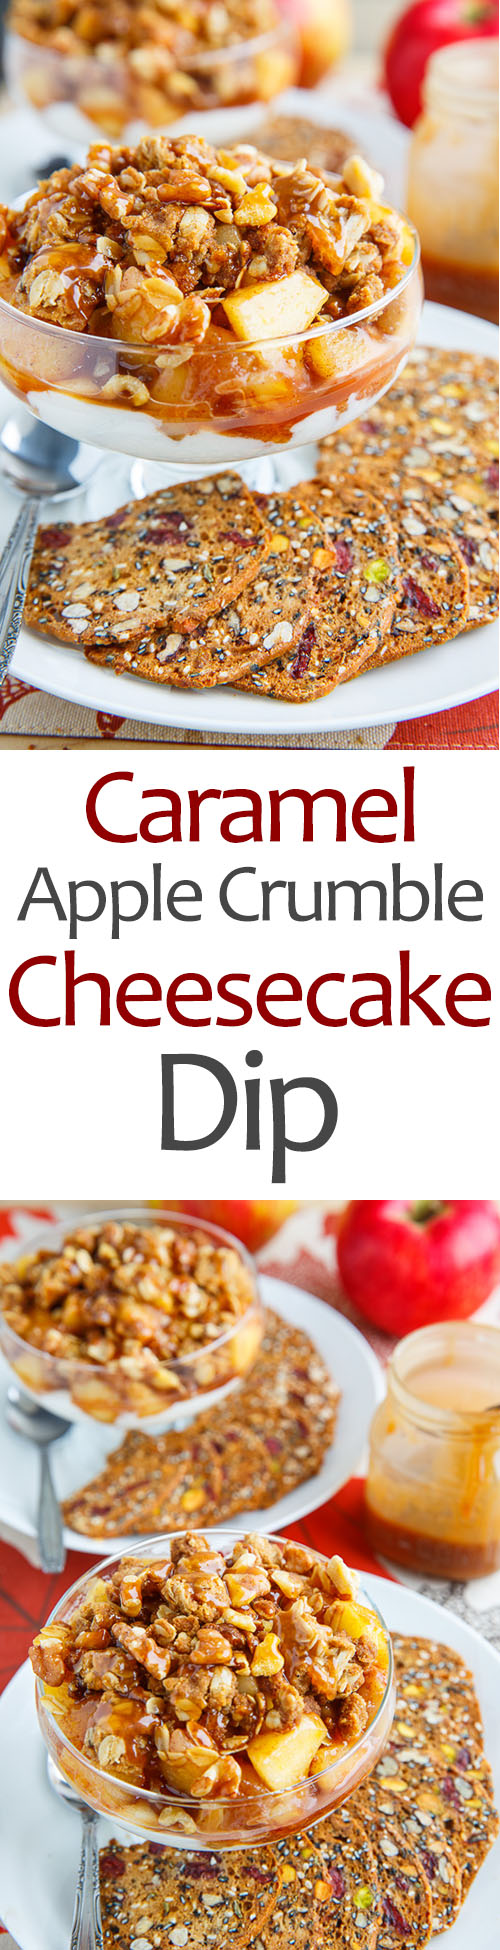 Caramel Apple Crumble Cheesecake Dip